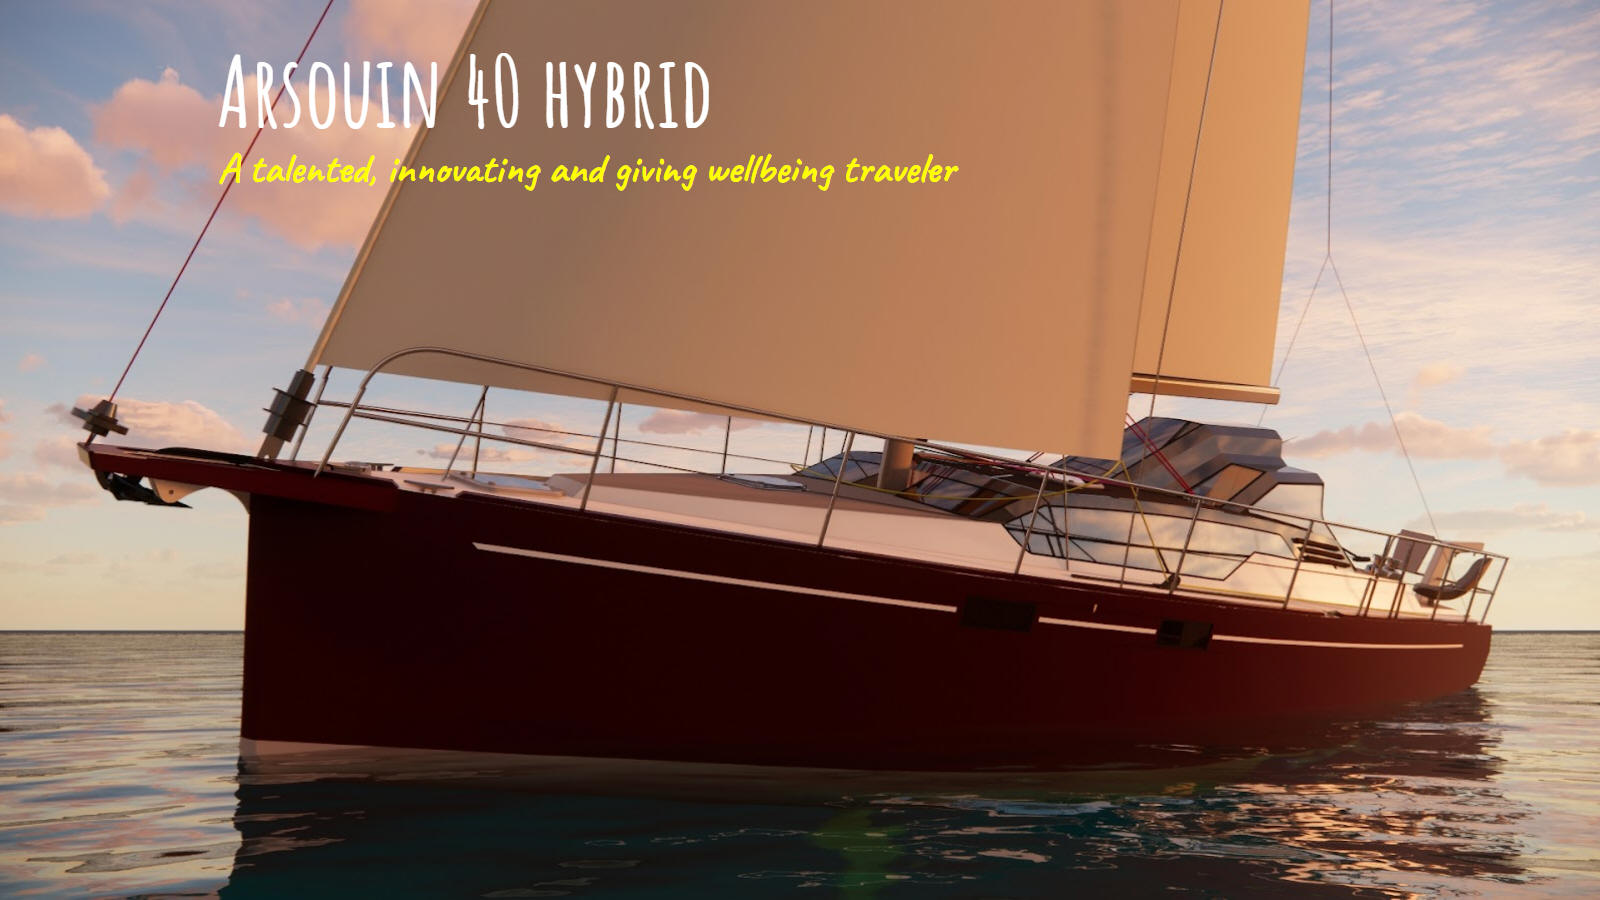 Arsouin 40 hybrid electrics, innovative cruising sailboat